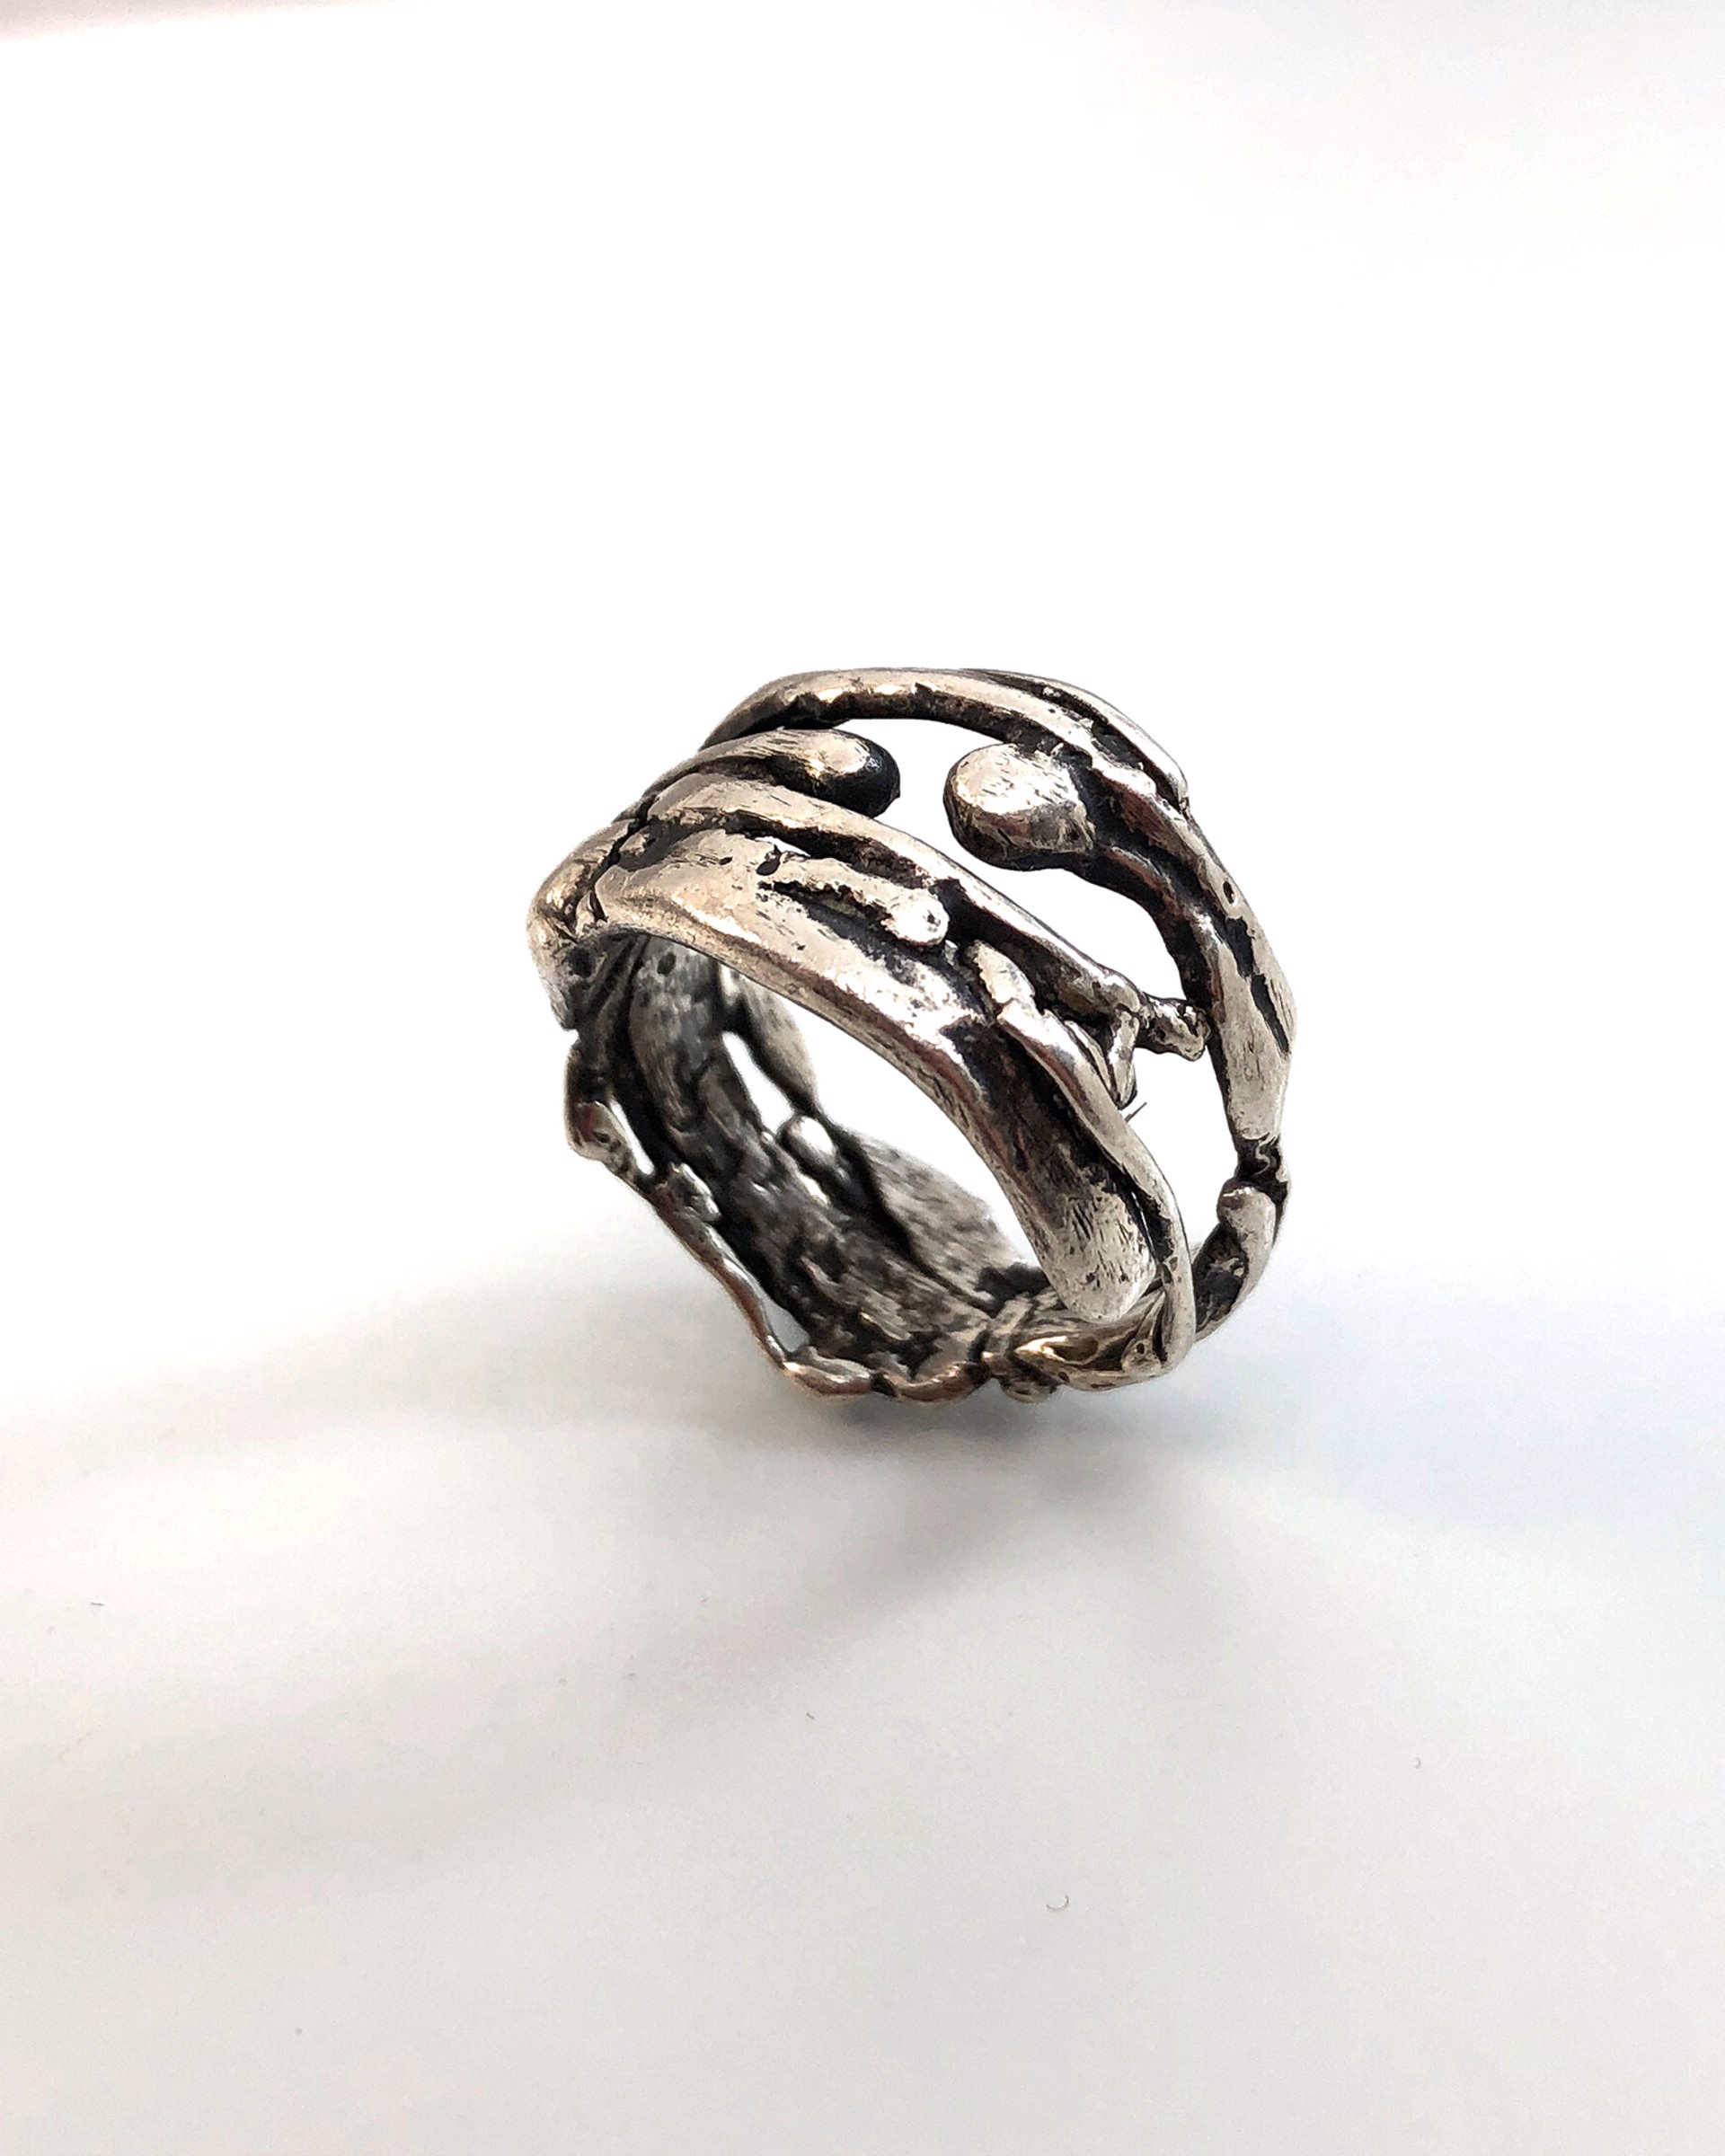 Fused Silver Ring by Carli Schultz